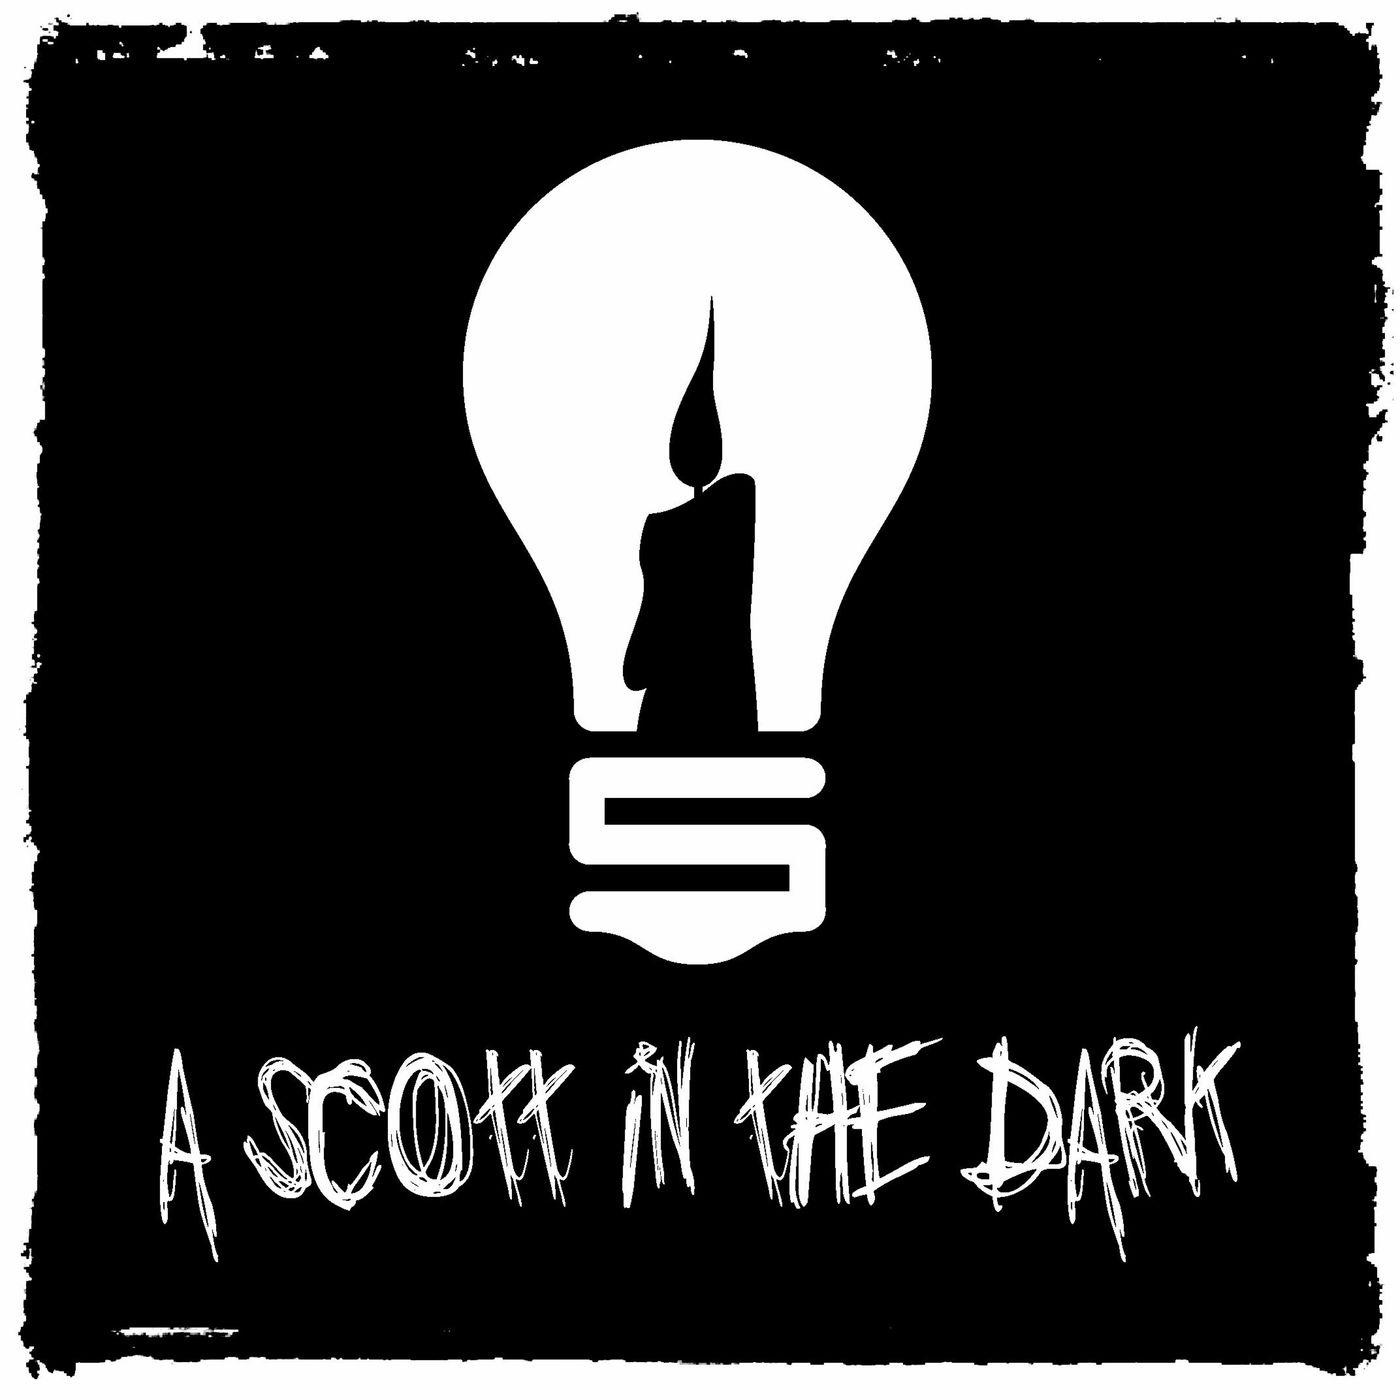 [A Scott in the Dark] Episode 44 The Power of Diversity